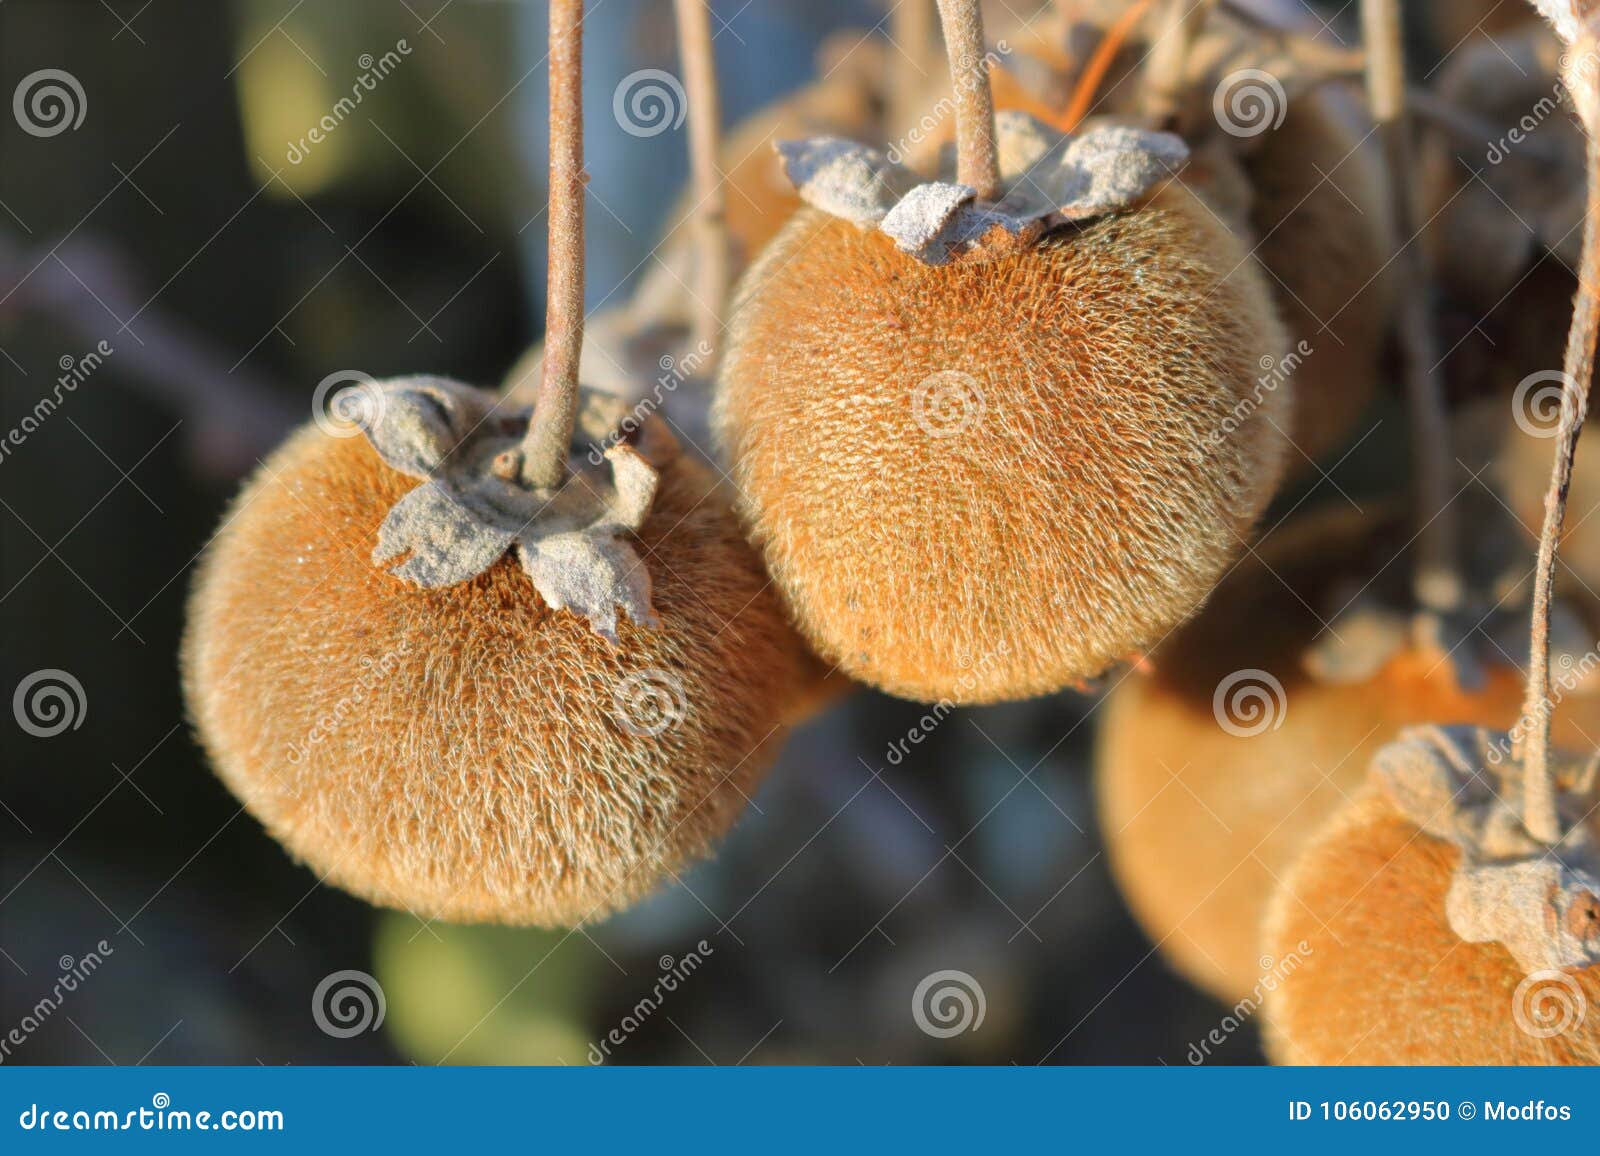 Fruit sycamore tree